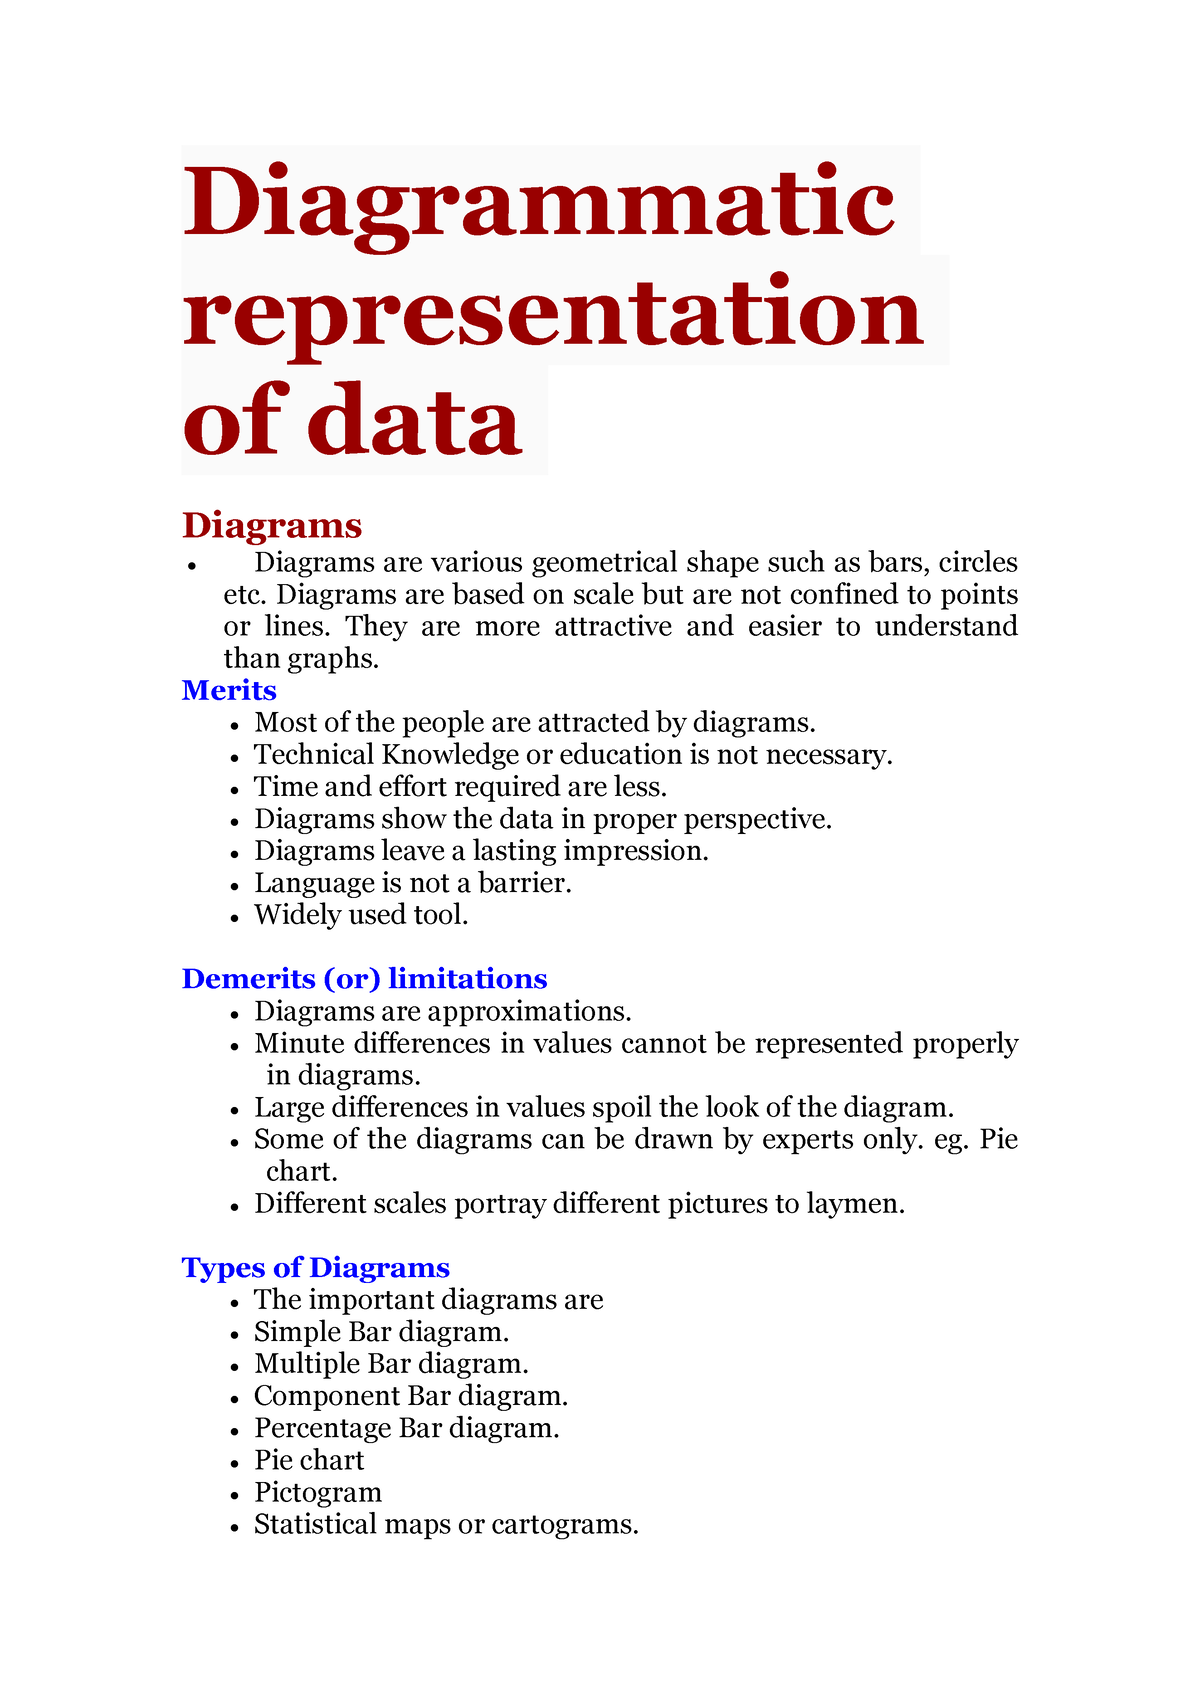 diagrammatic representation of data